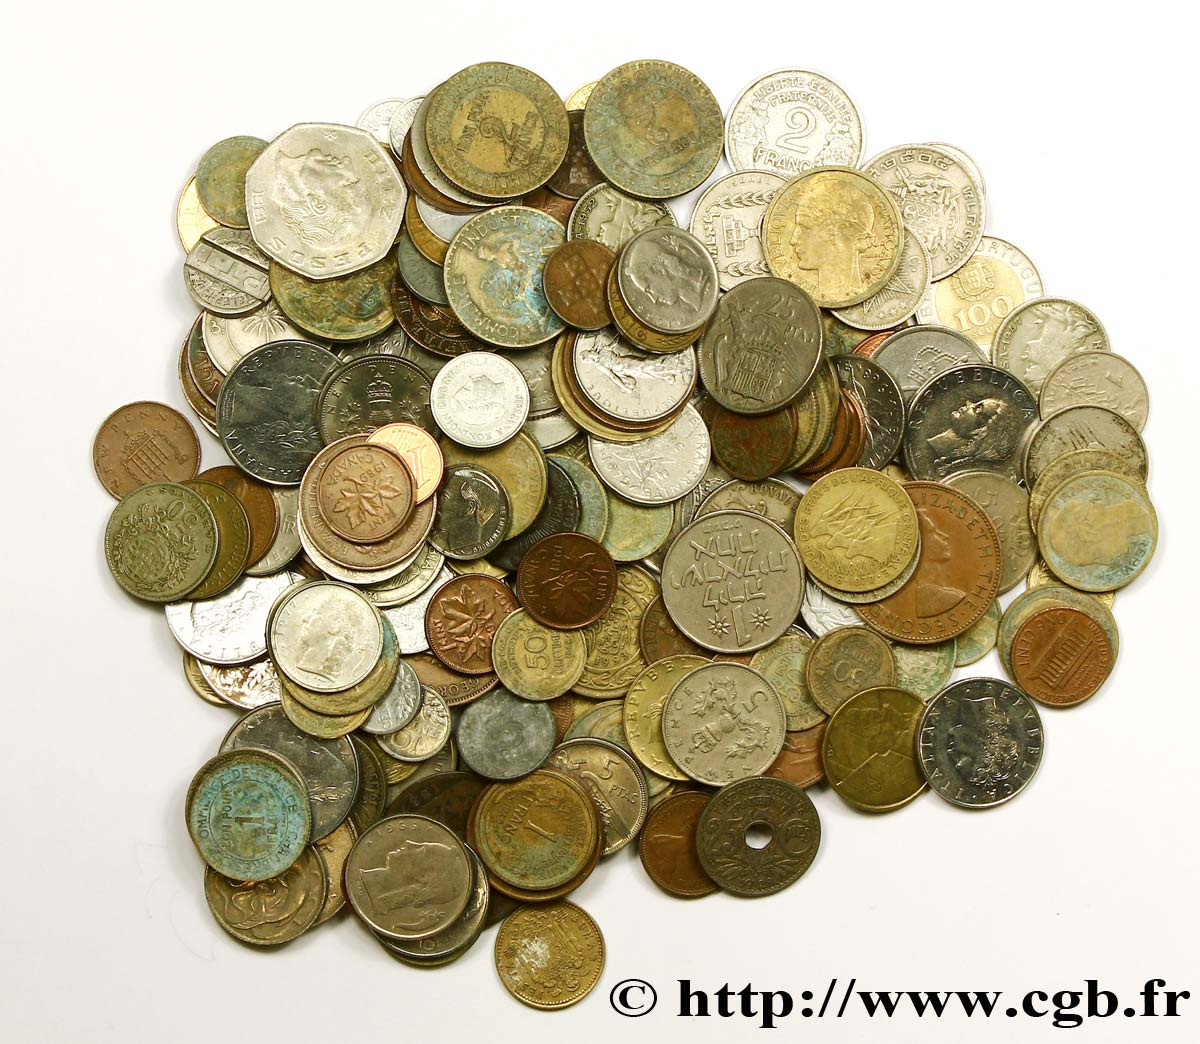 LOTTE DI MONETE DI MONDO 1 kilo de monnaies diverses du Monde n.d. - MB 